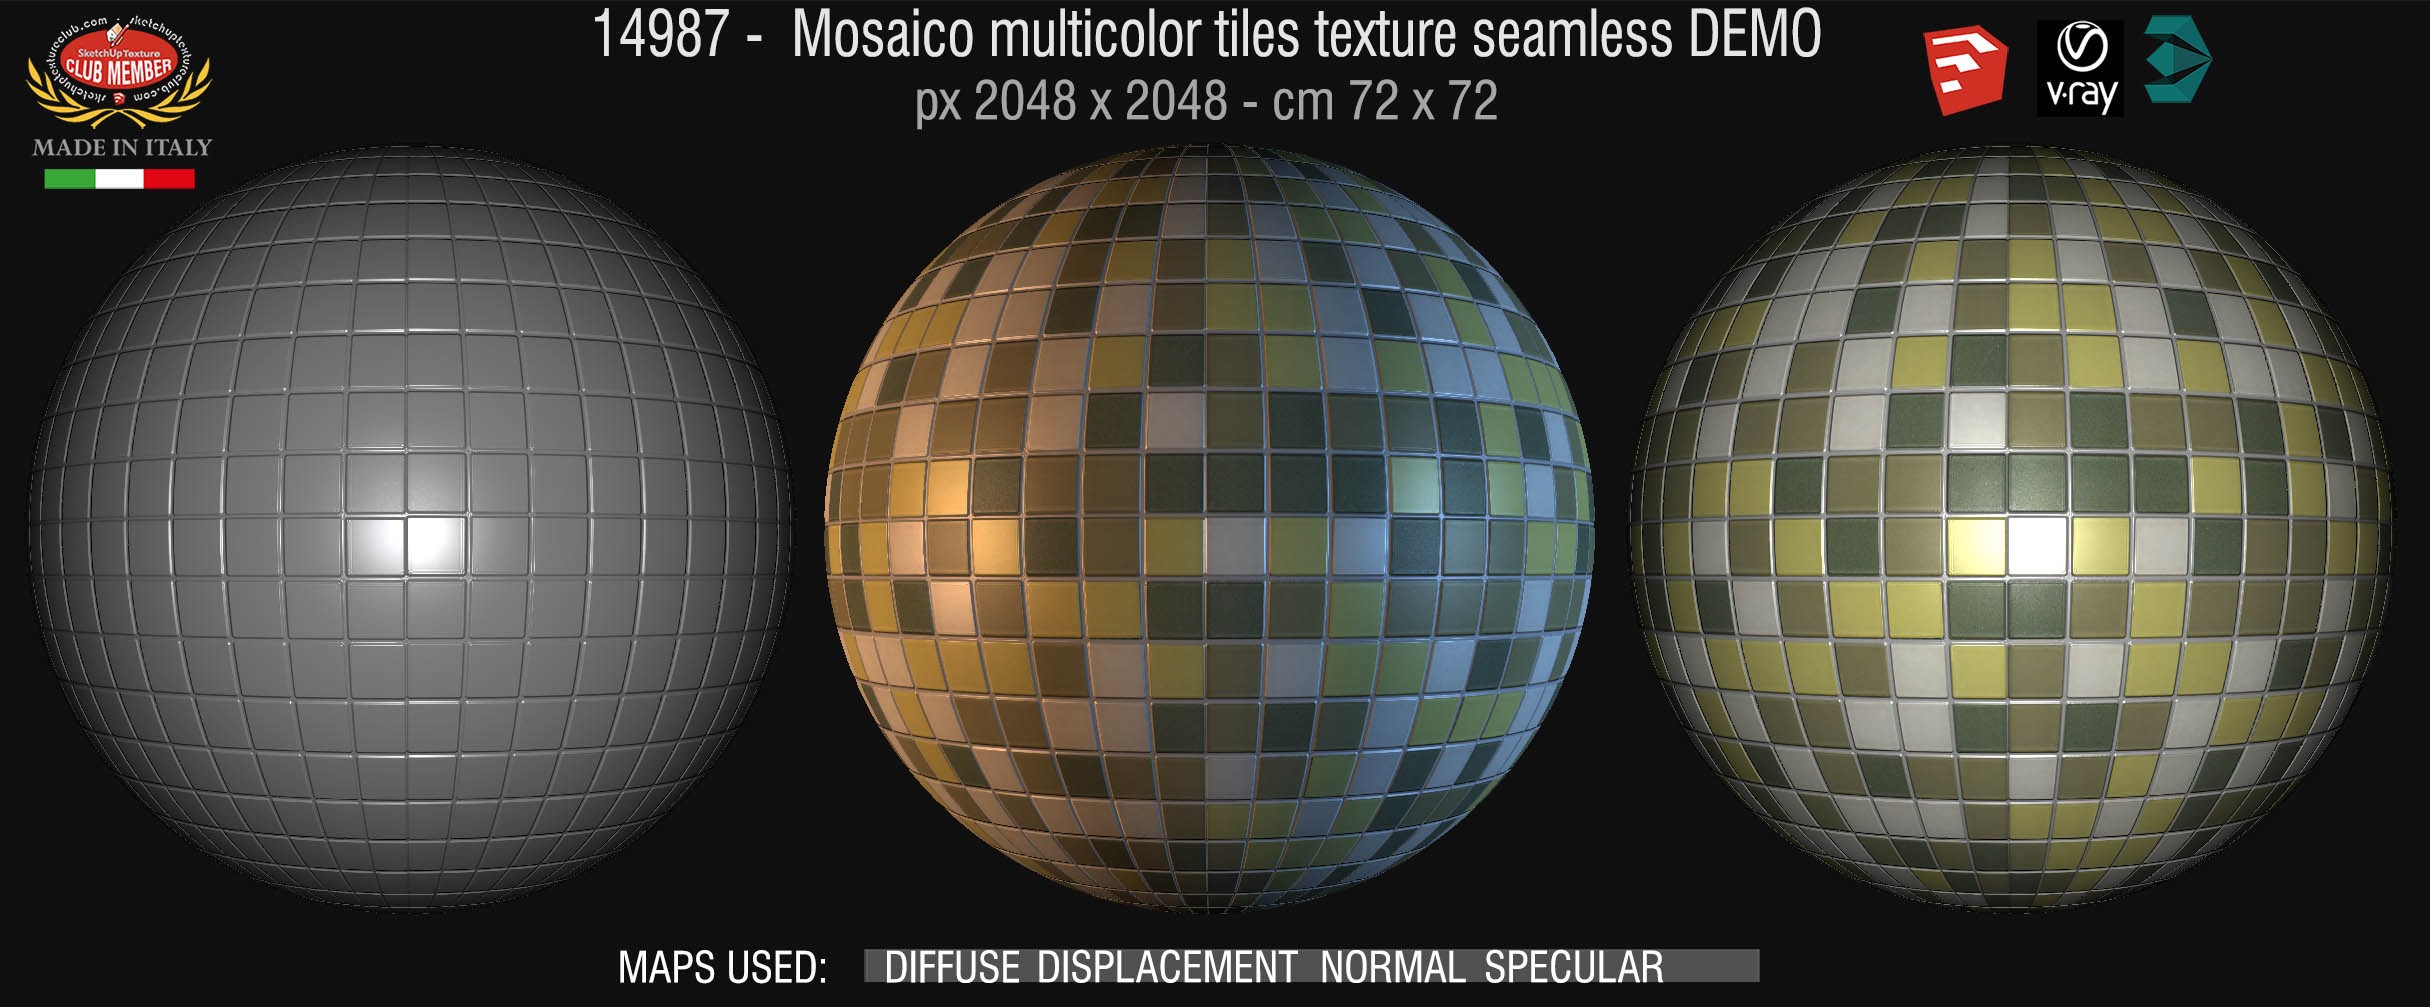 14987 Mosaico multicolor tiles texture seamless + maps DEMO